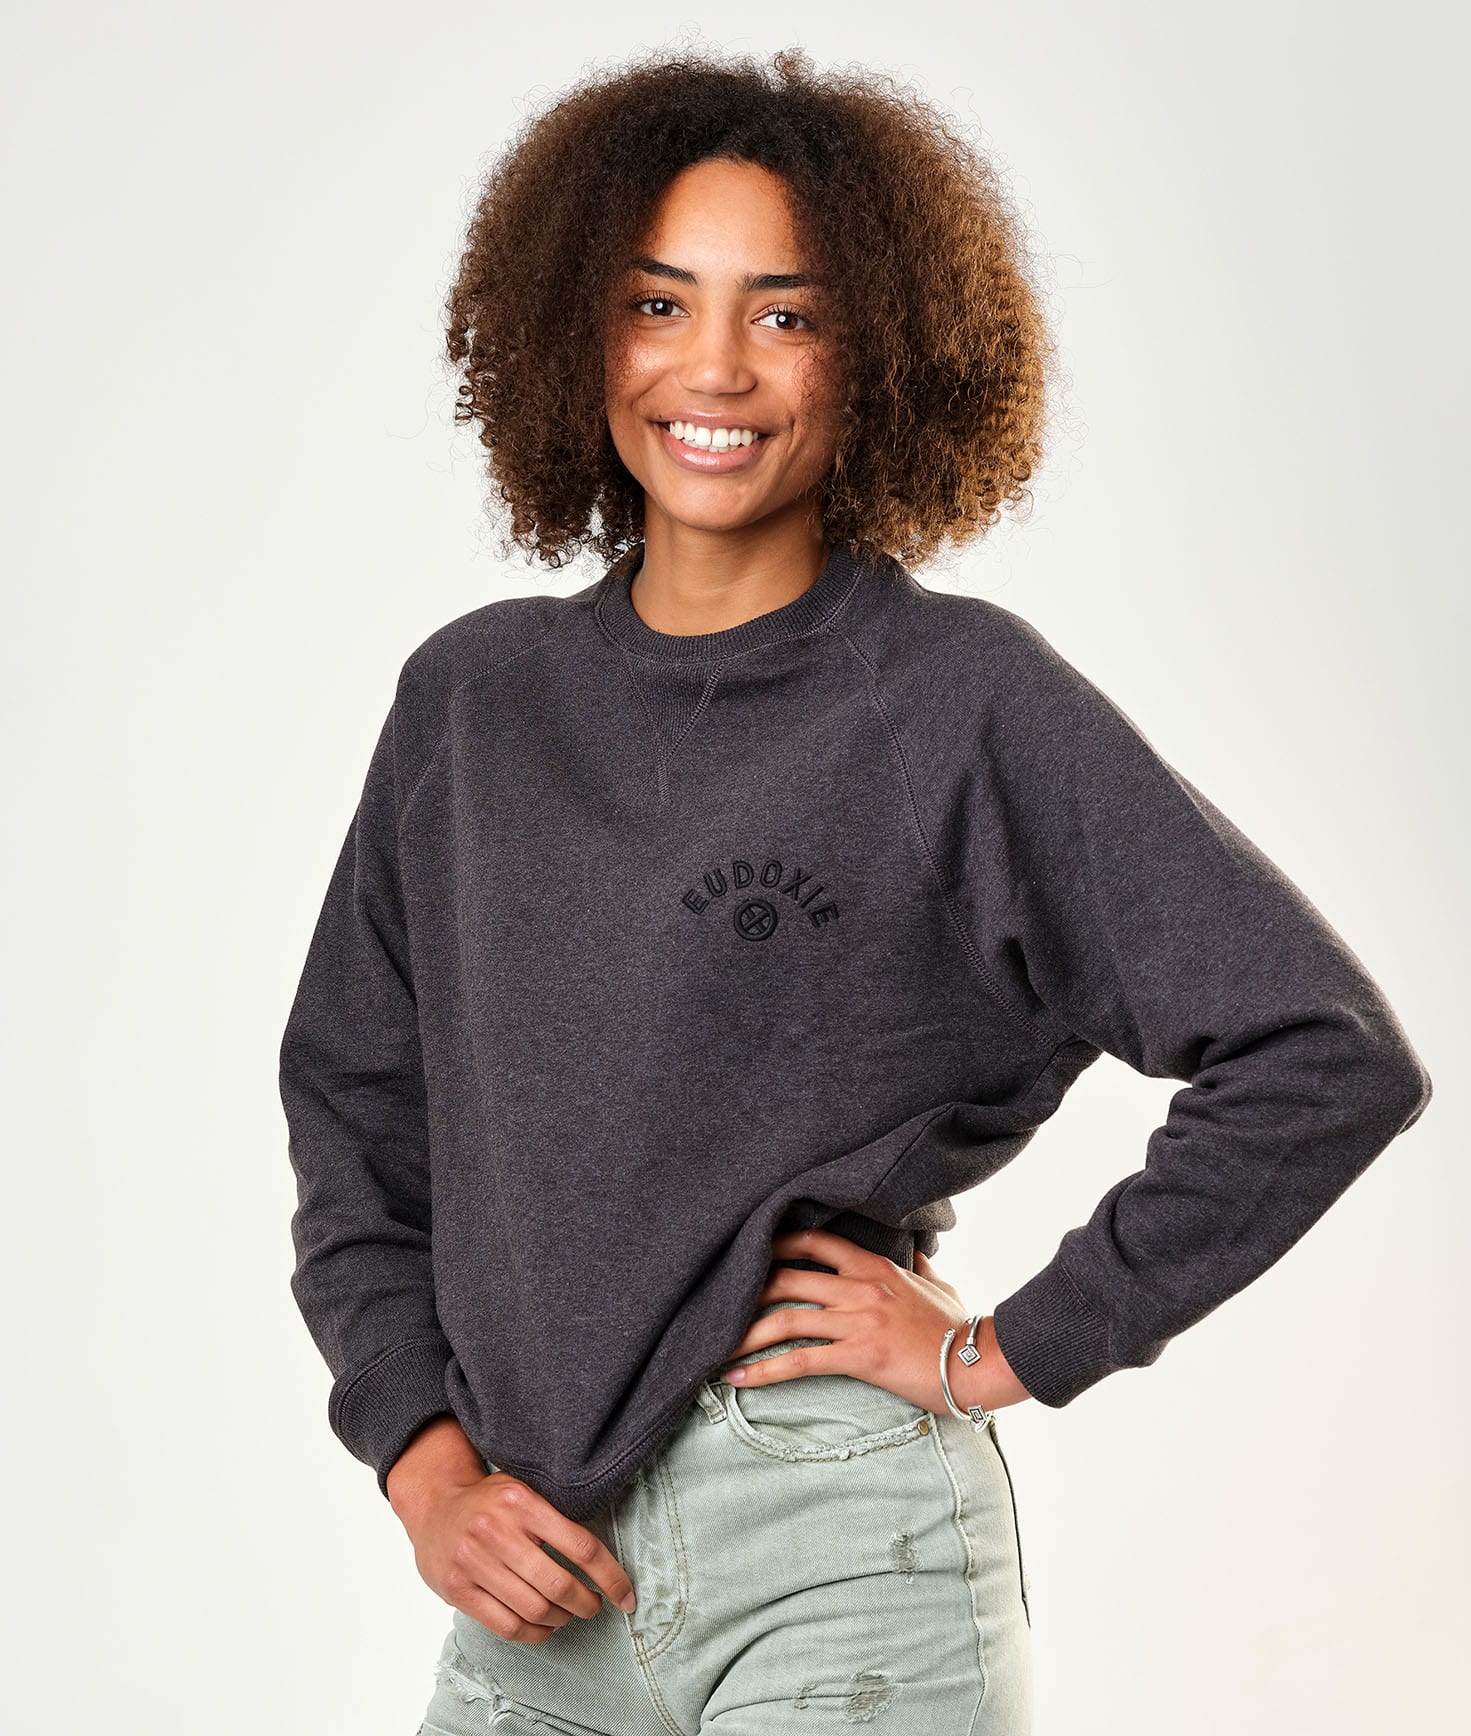 Eudoxie "Bonnie" Embroidered Sweatshirt - Medium - Bild 1